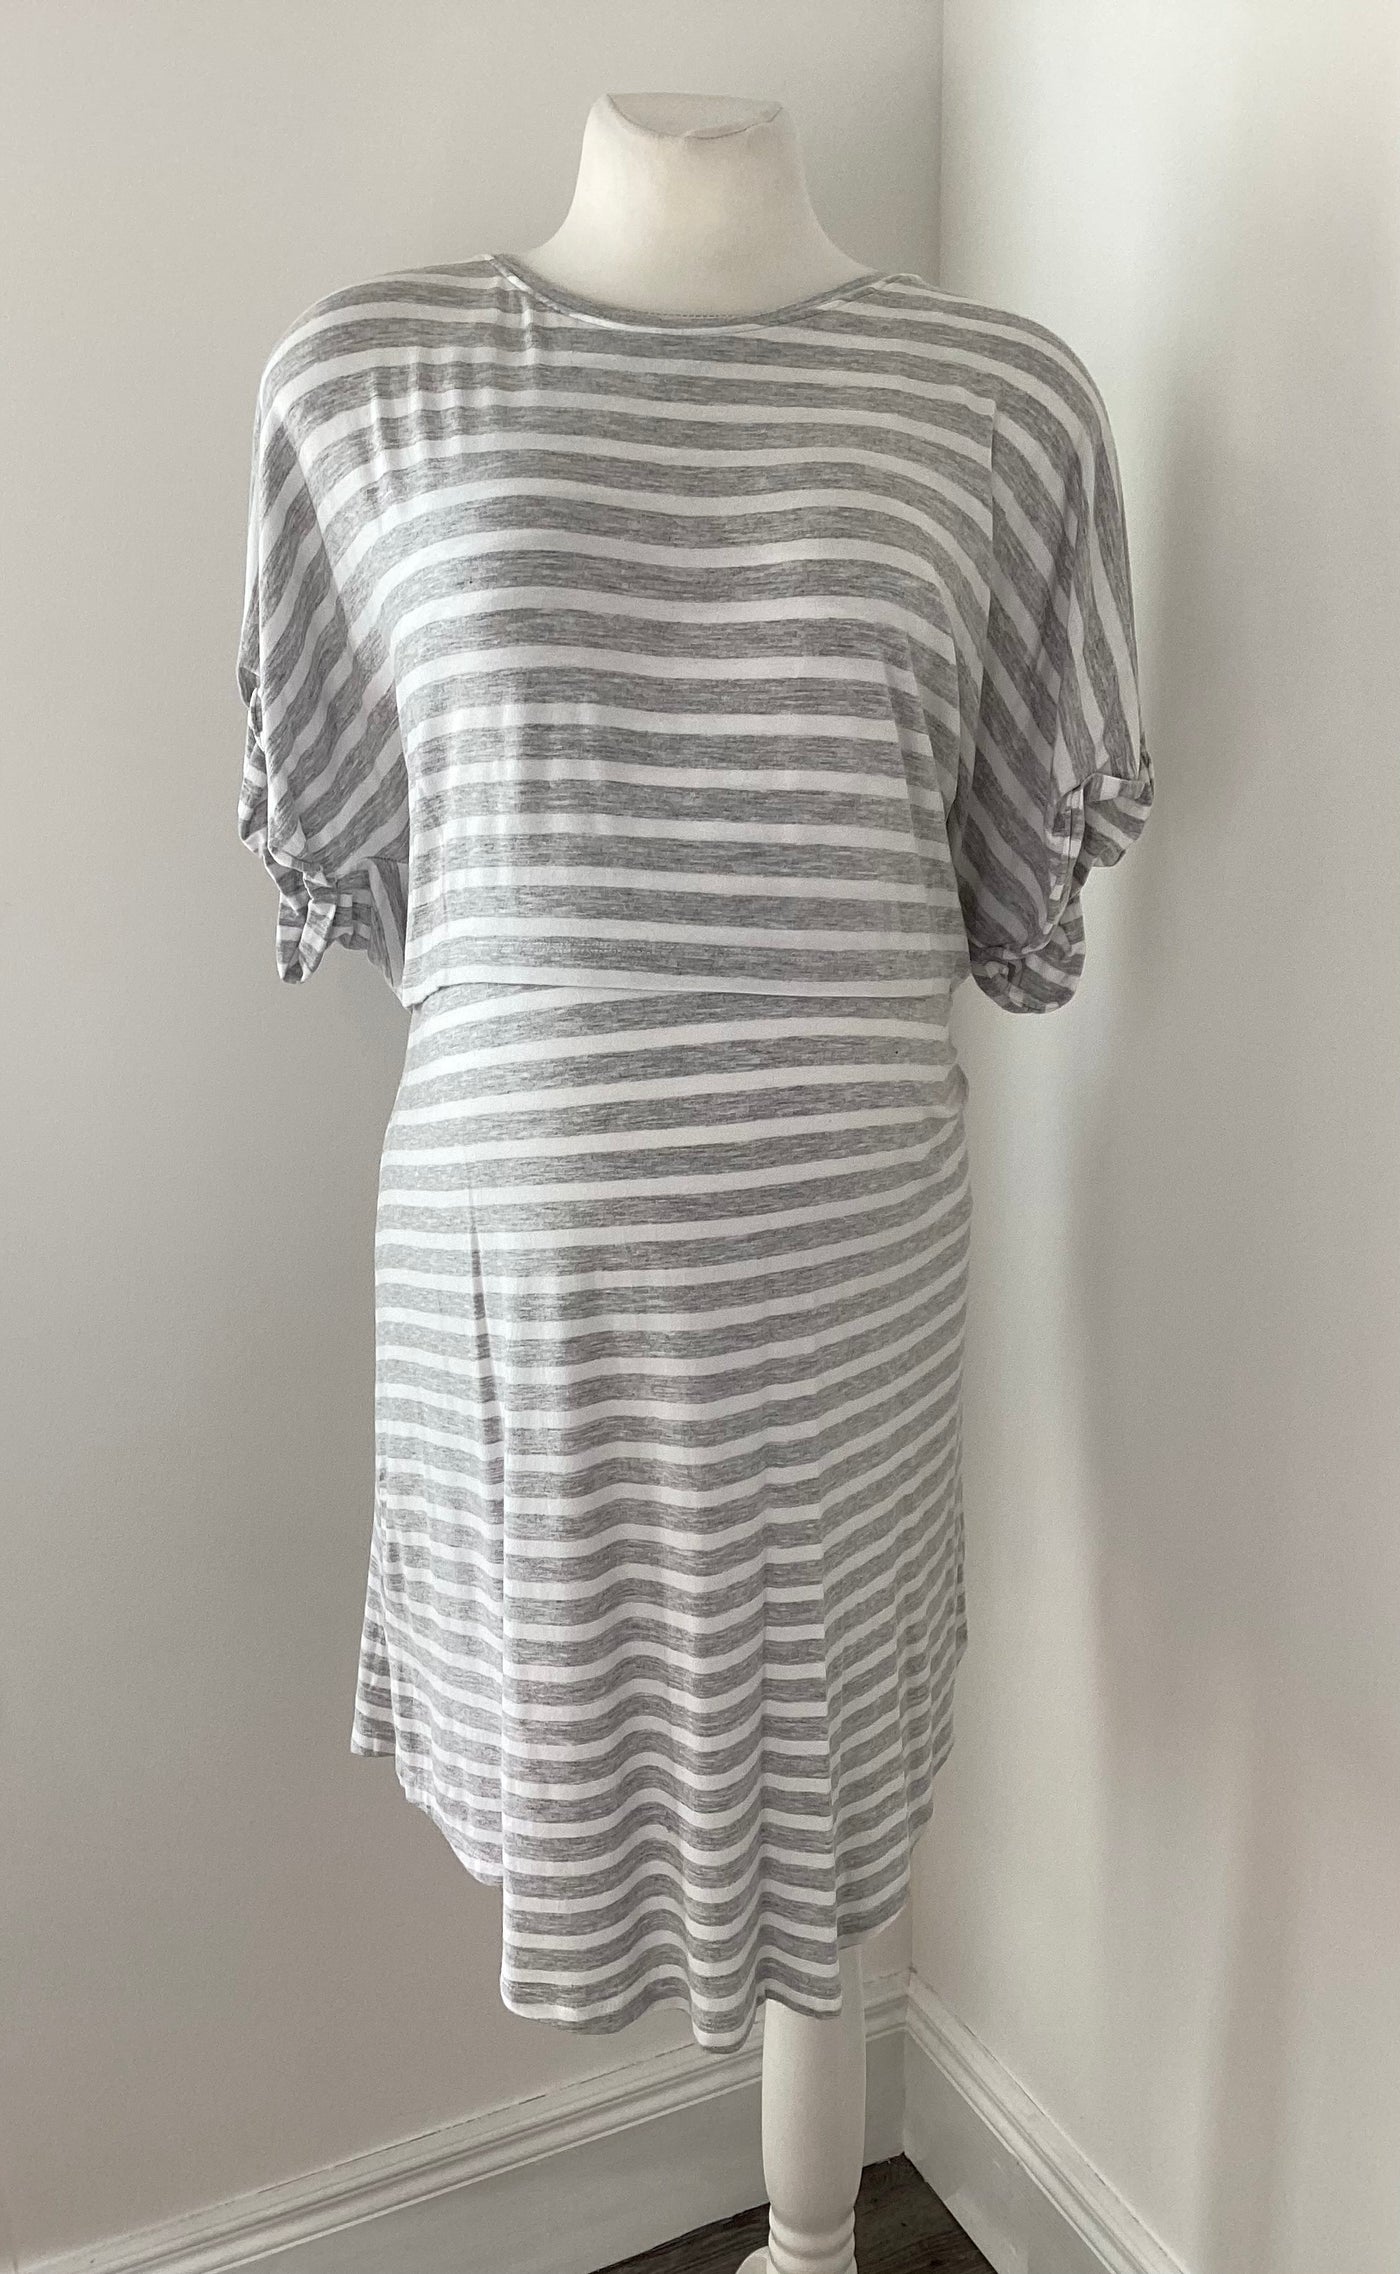 Blooming Marvellous grey & white short sleeved nursing dress - Size L (Approx UK 14/16)